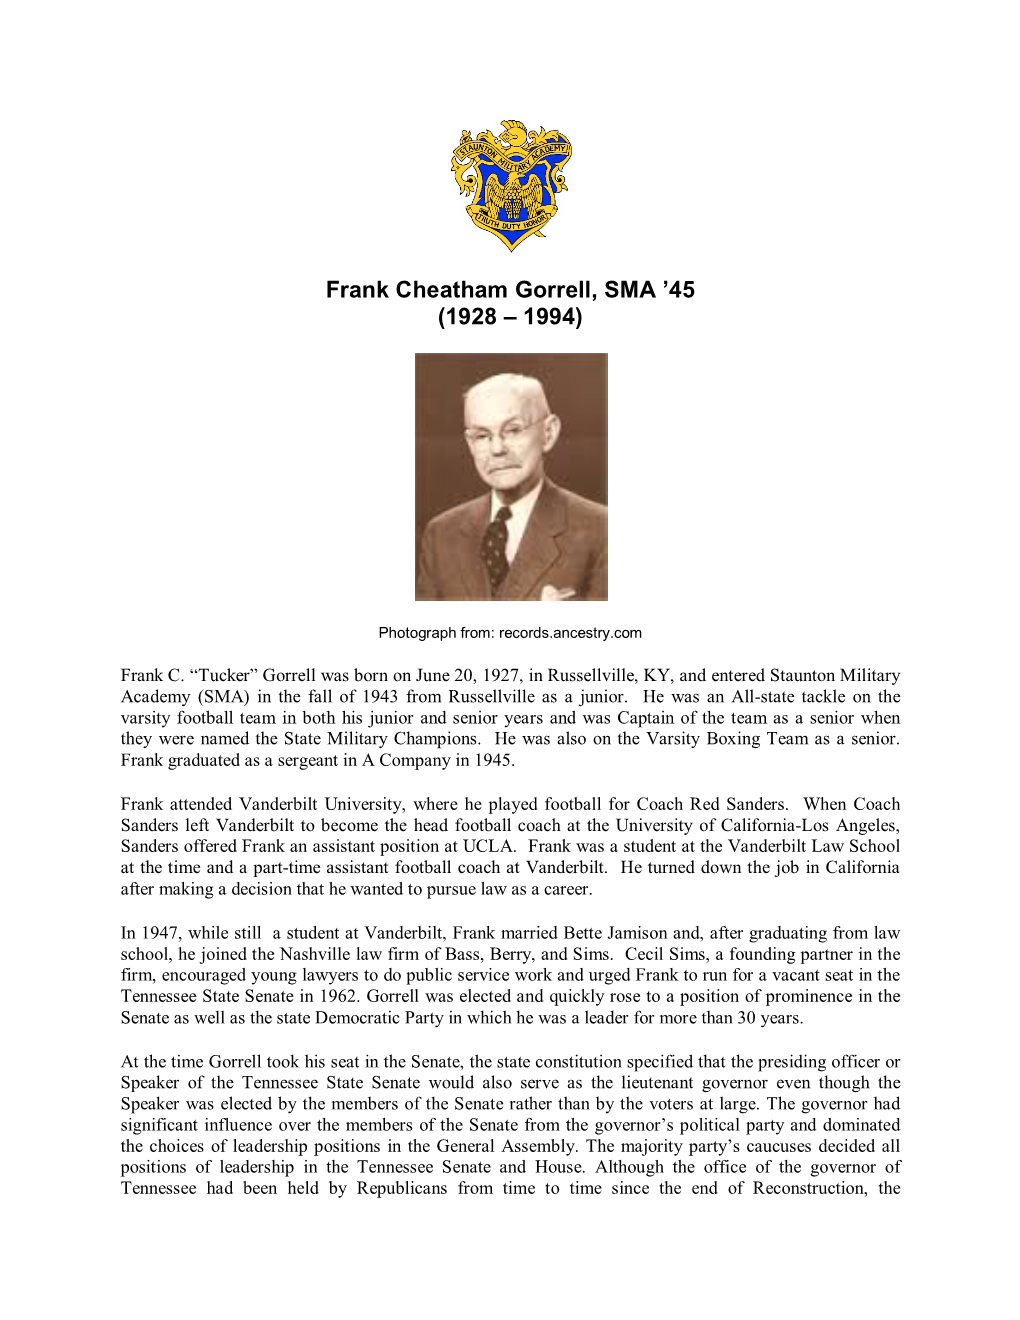 Frank Cheatham Gorrell, SMA ’45 (1928 – 1994)